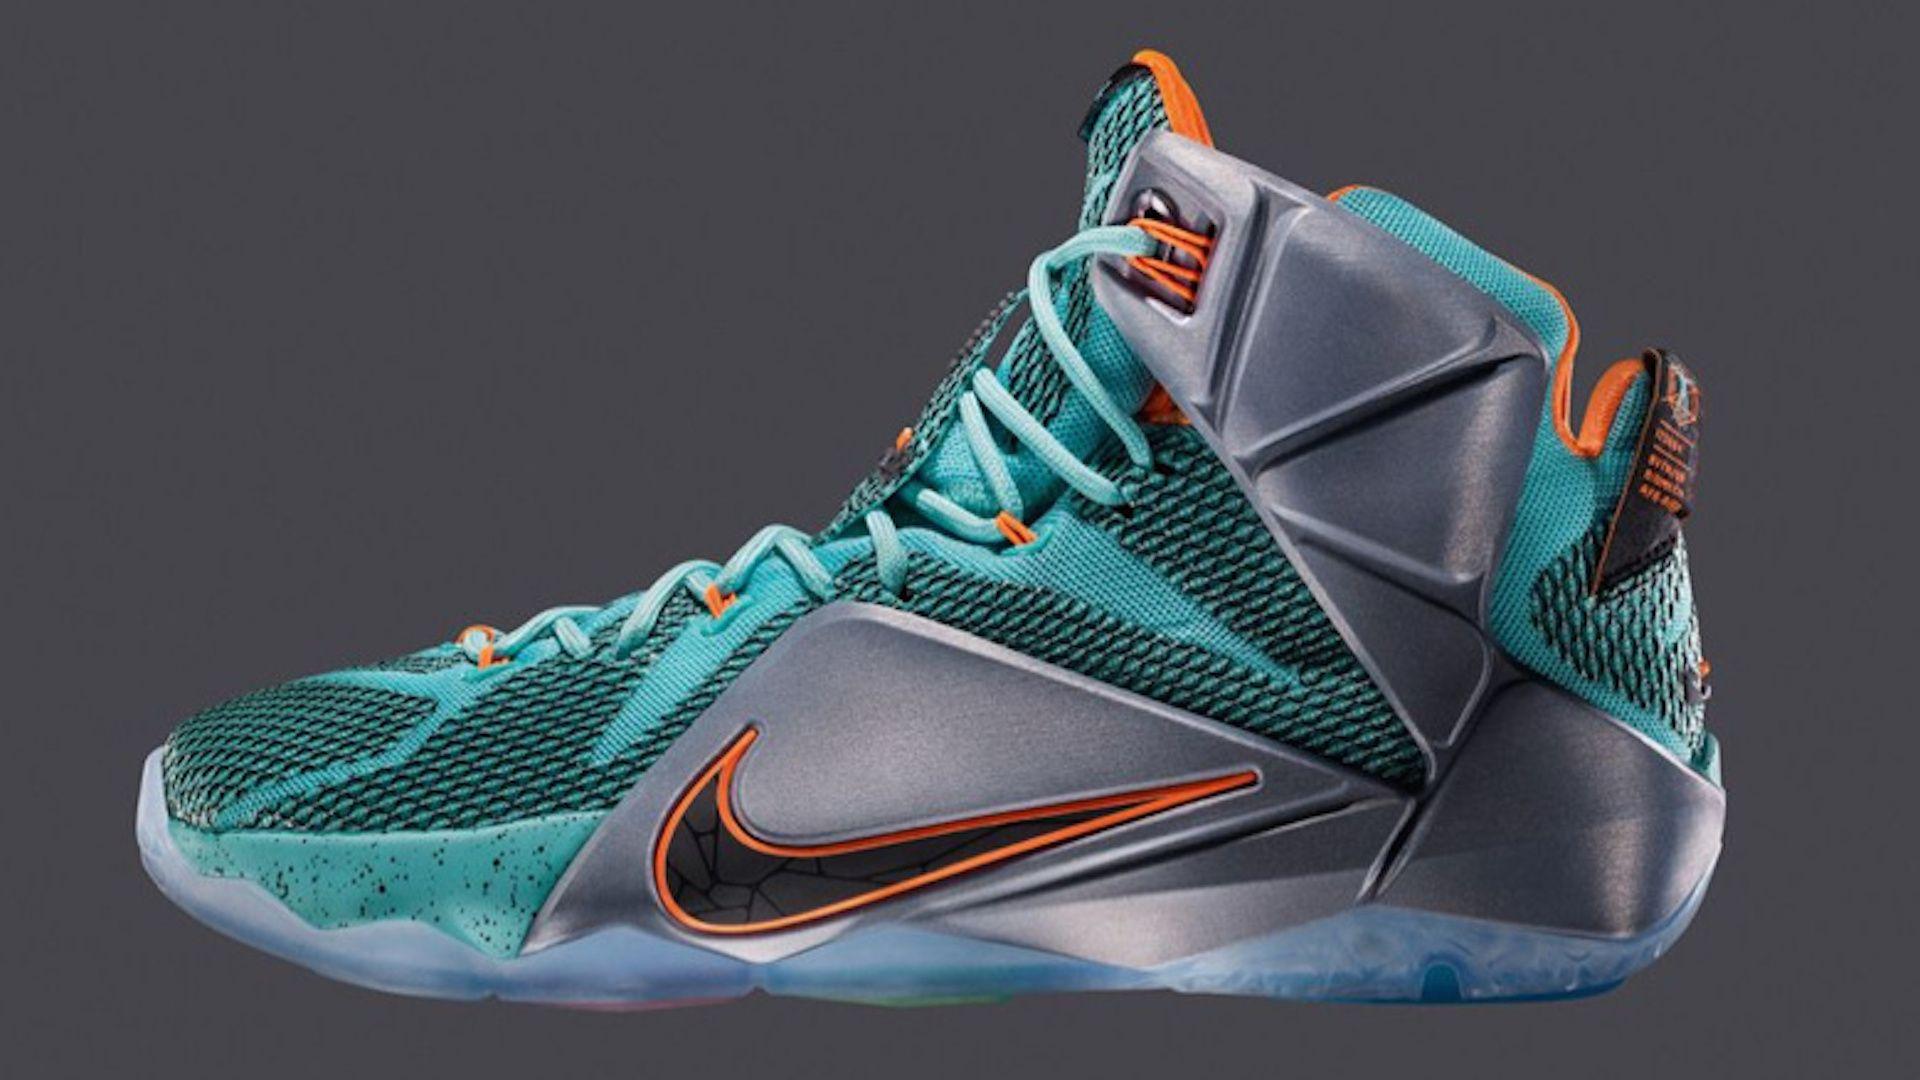 Nike releases newest LeBron James signature shoe in LeBron 12. NBA